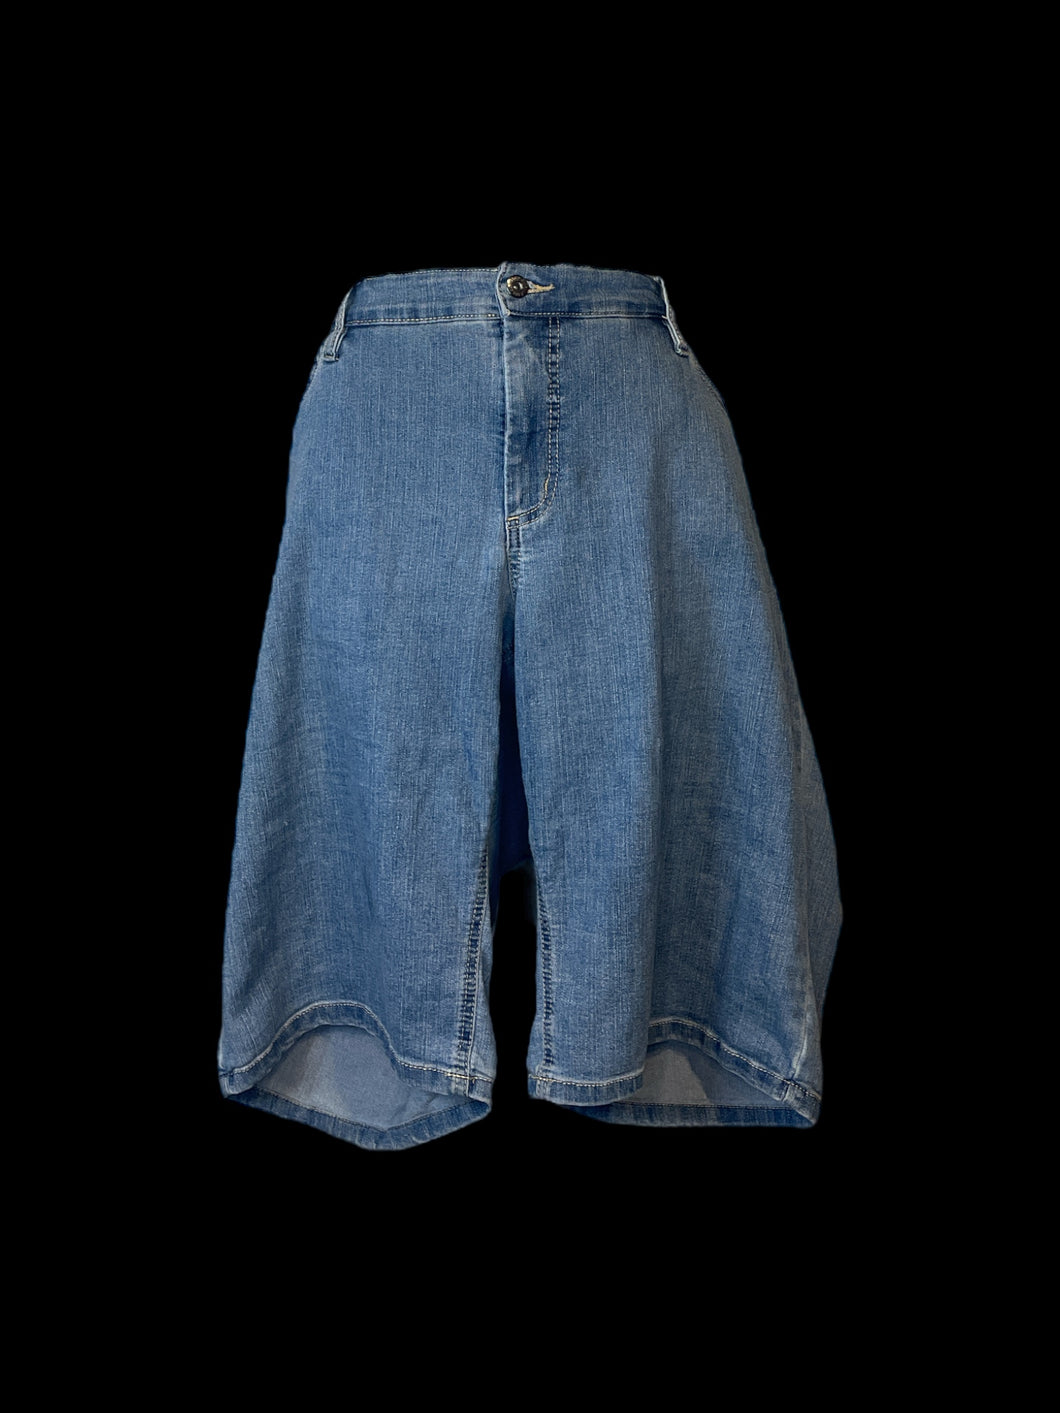 1X Blue denim Bermuda shorts w/ pockets, belt loops, & button/zipper closure